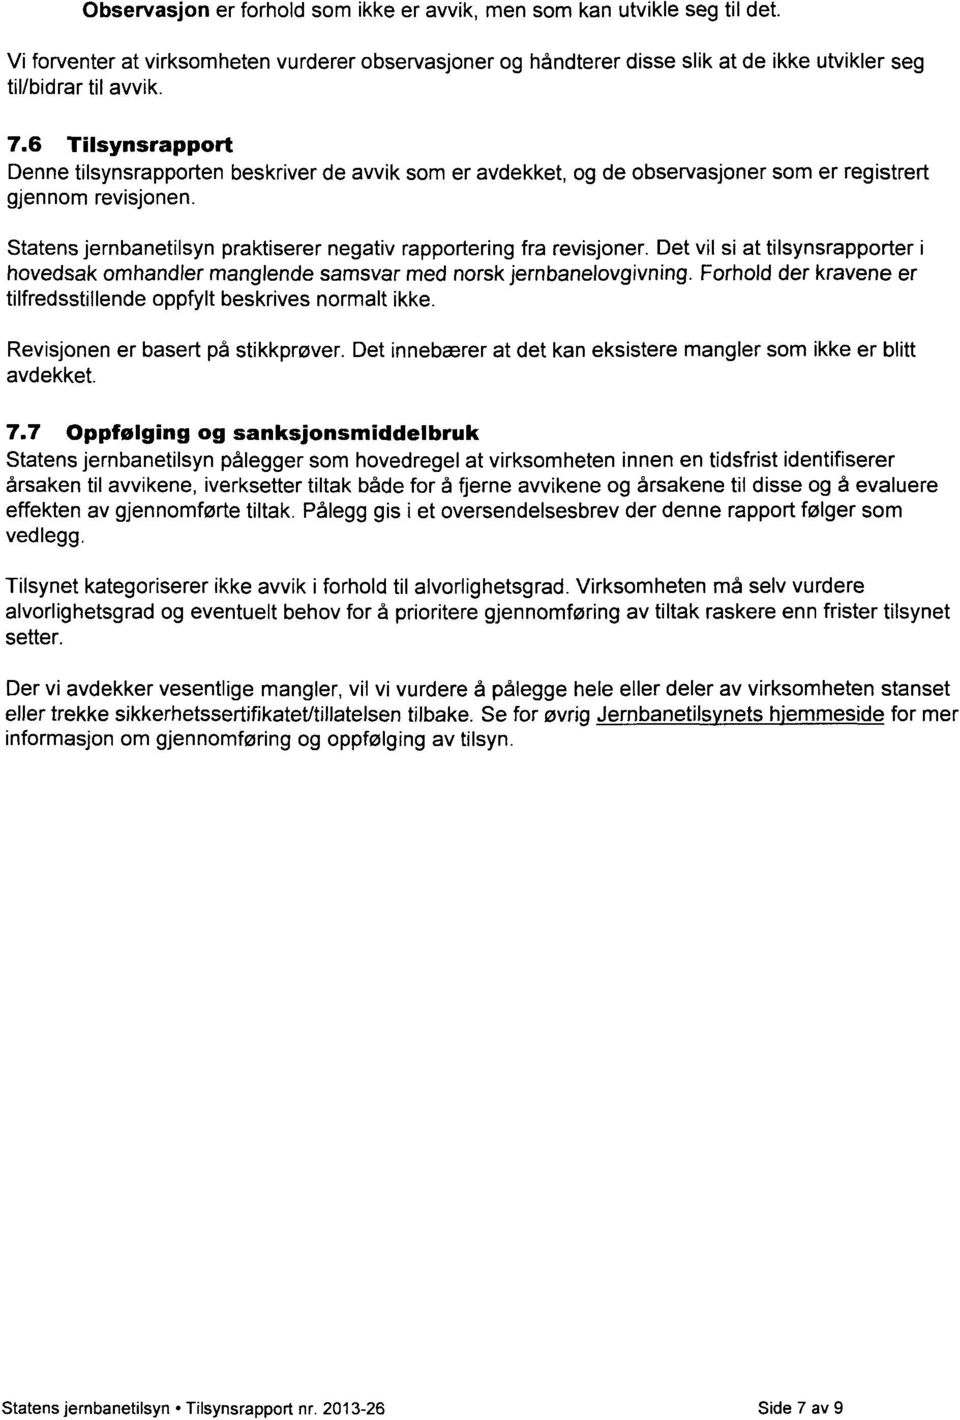 Statens jernbanetilsyn praktiserer negativ rapportering fra revisjoner. Det vil si at tilsynsrapporter i hovedsak omhandler manglende samsvar med norsk jernbanelovgivning.